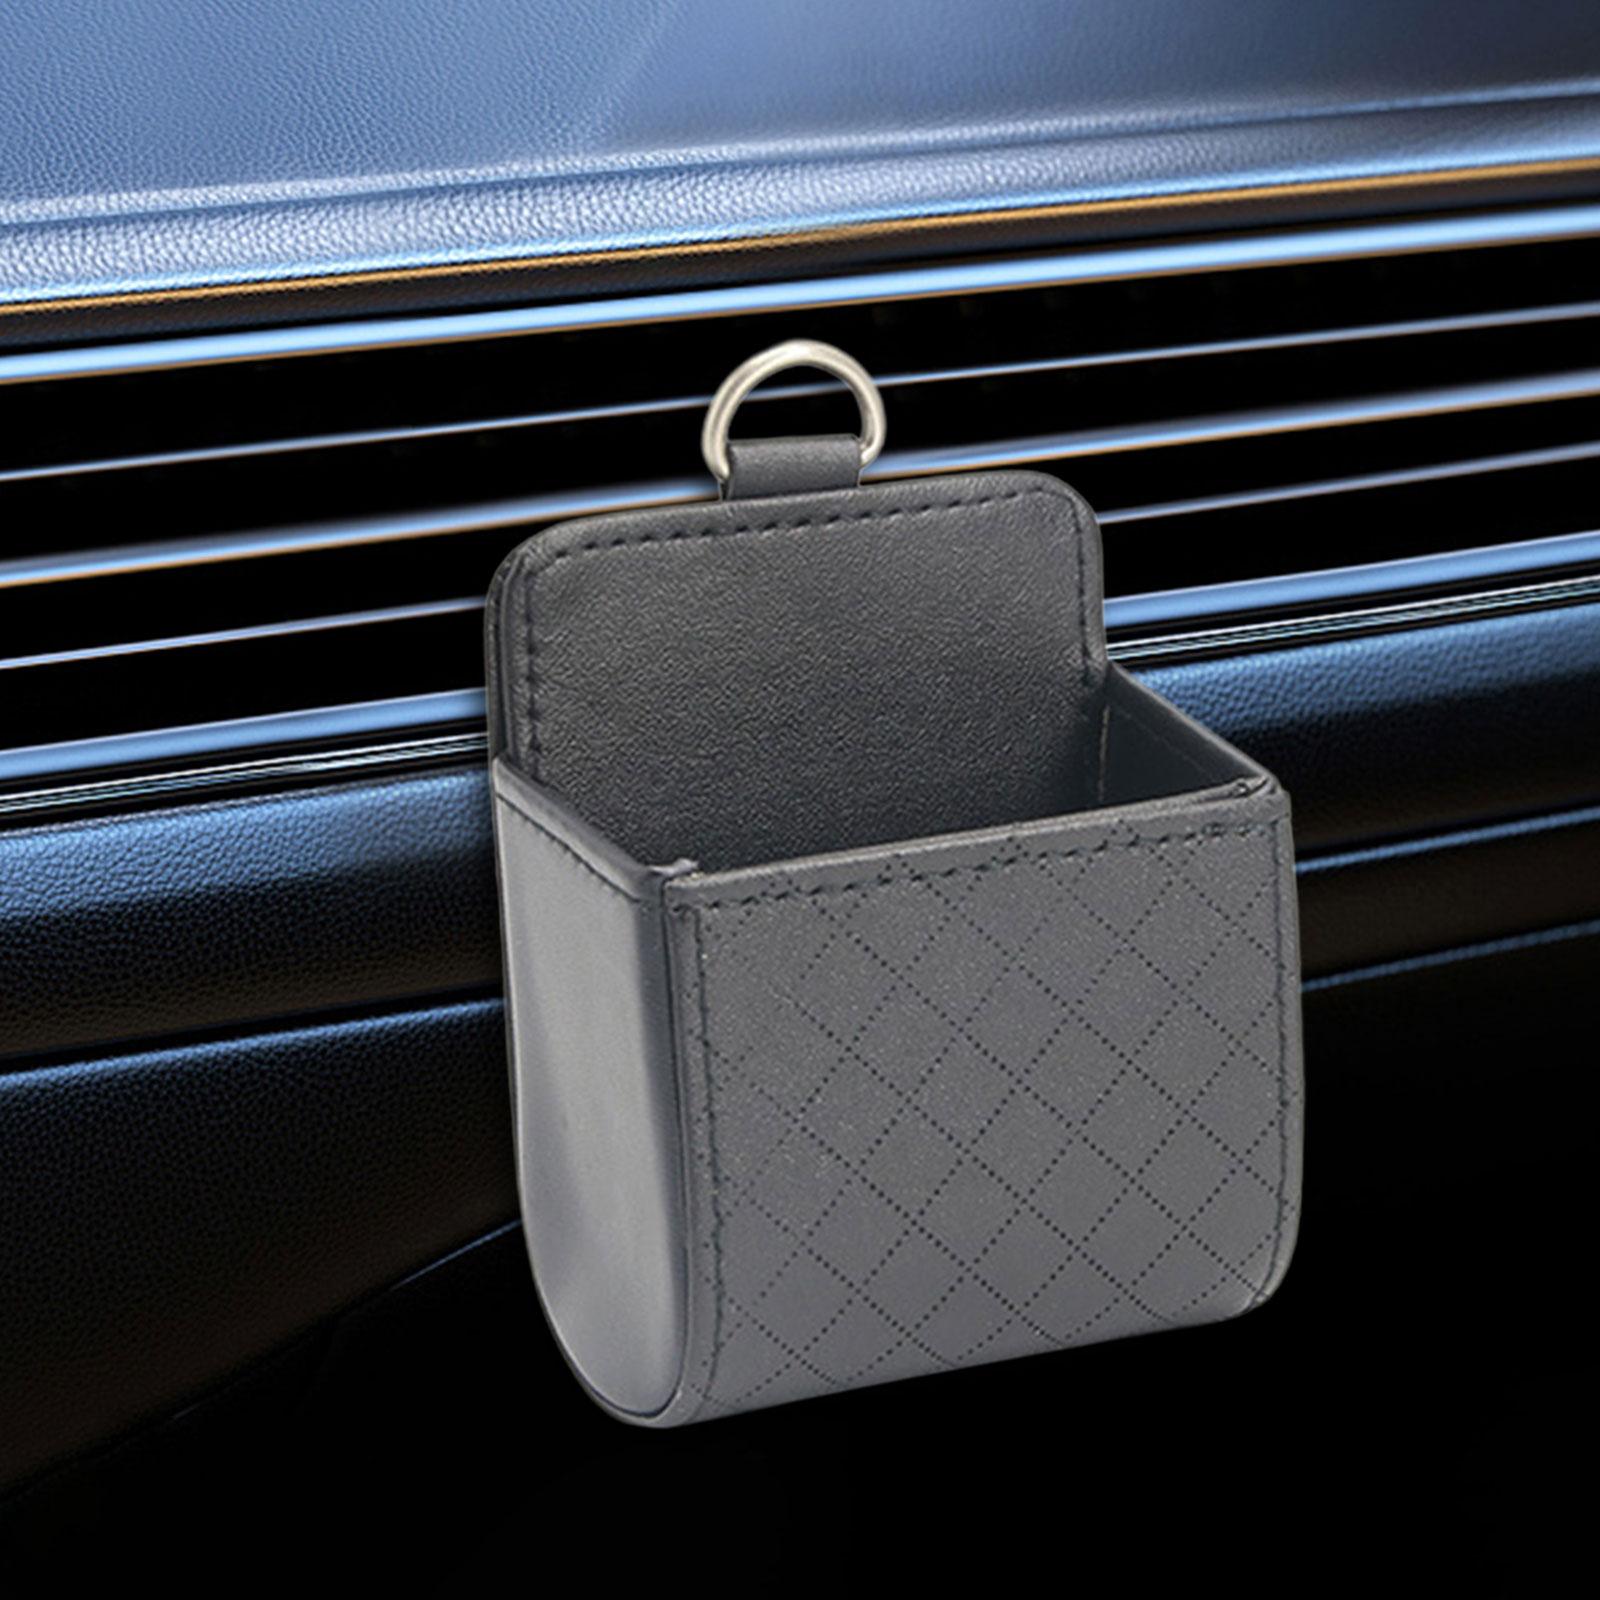 Car Air Vent Bag Organizer Durable Air Vent Holder Bag for Phones Bills Black